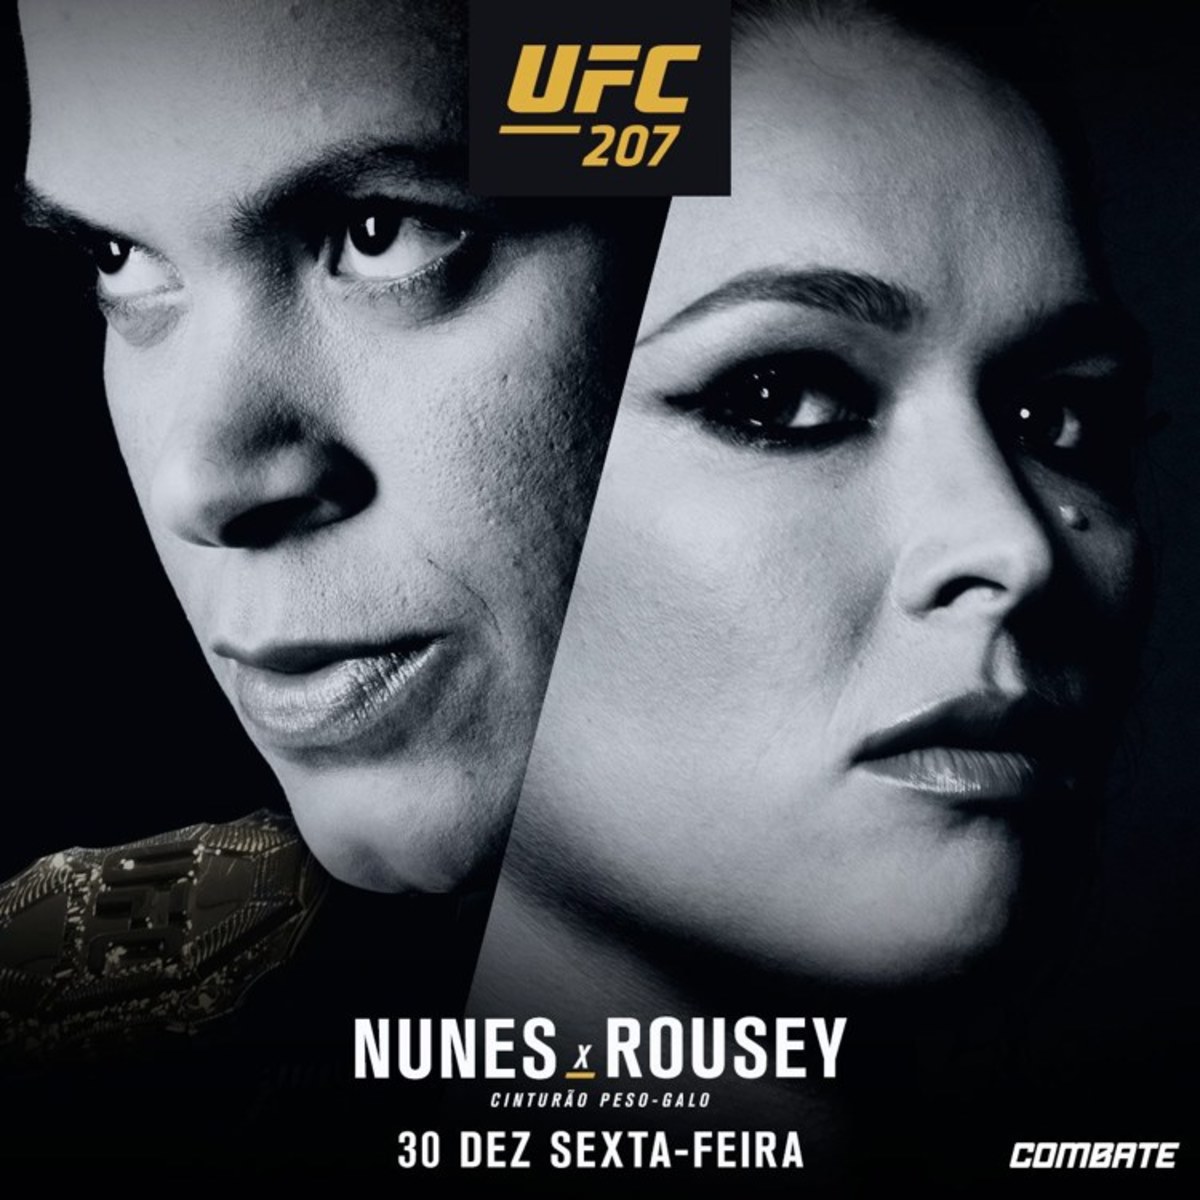 UFC-207-Amanda-Nunes-vs-Ronda-Rousey-square-poster-750.jpg